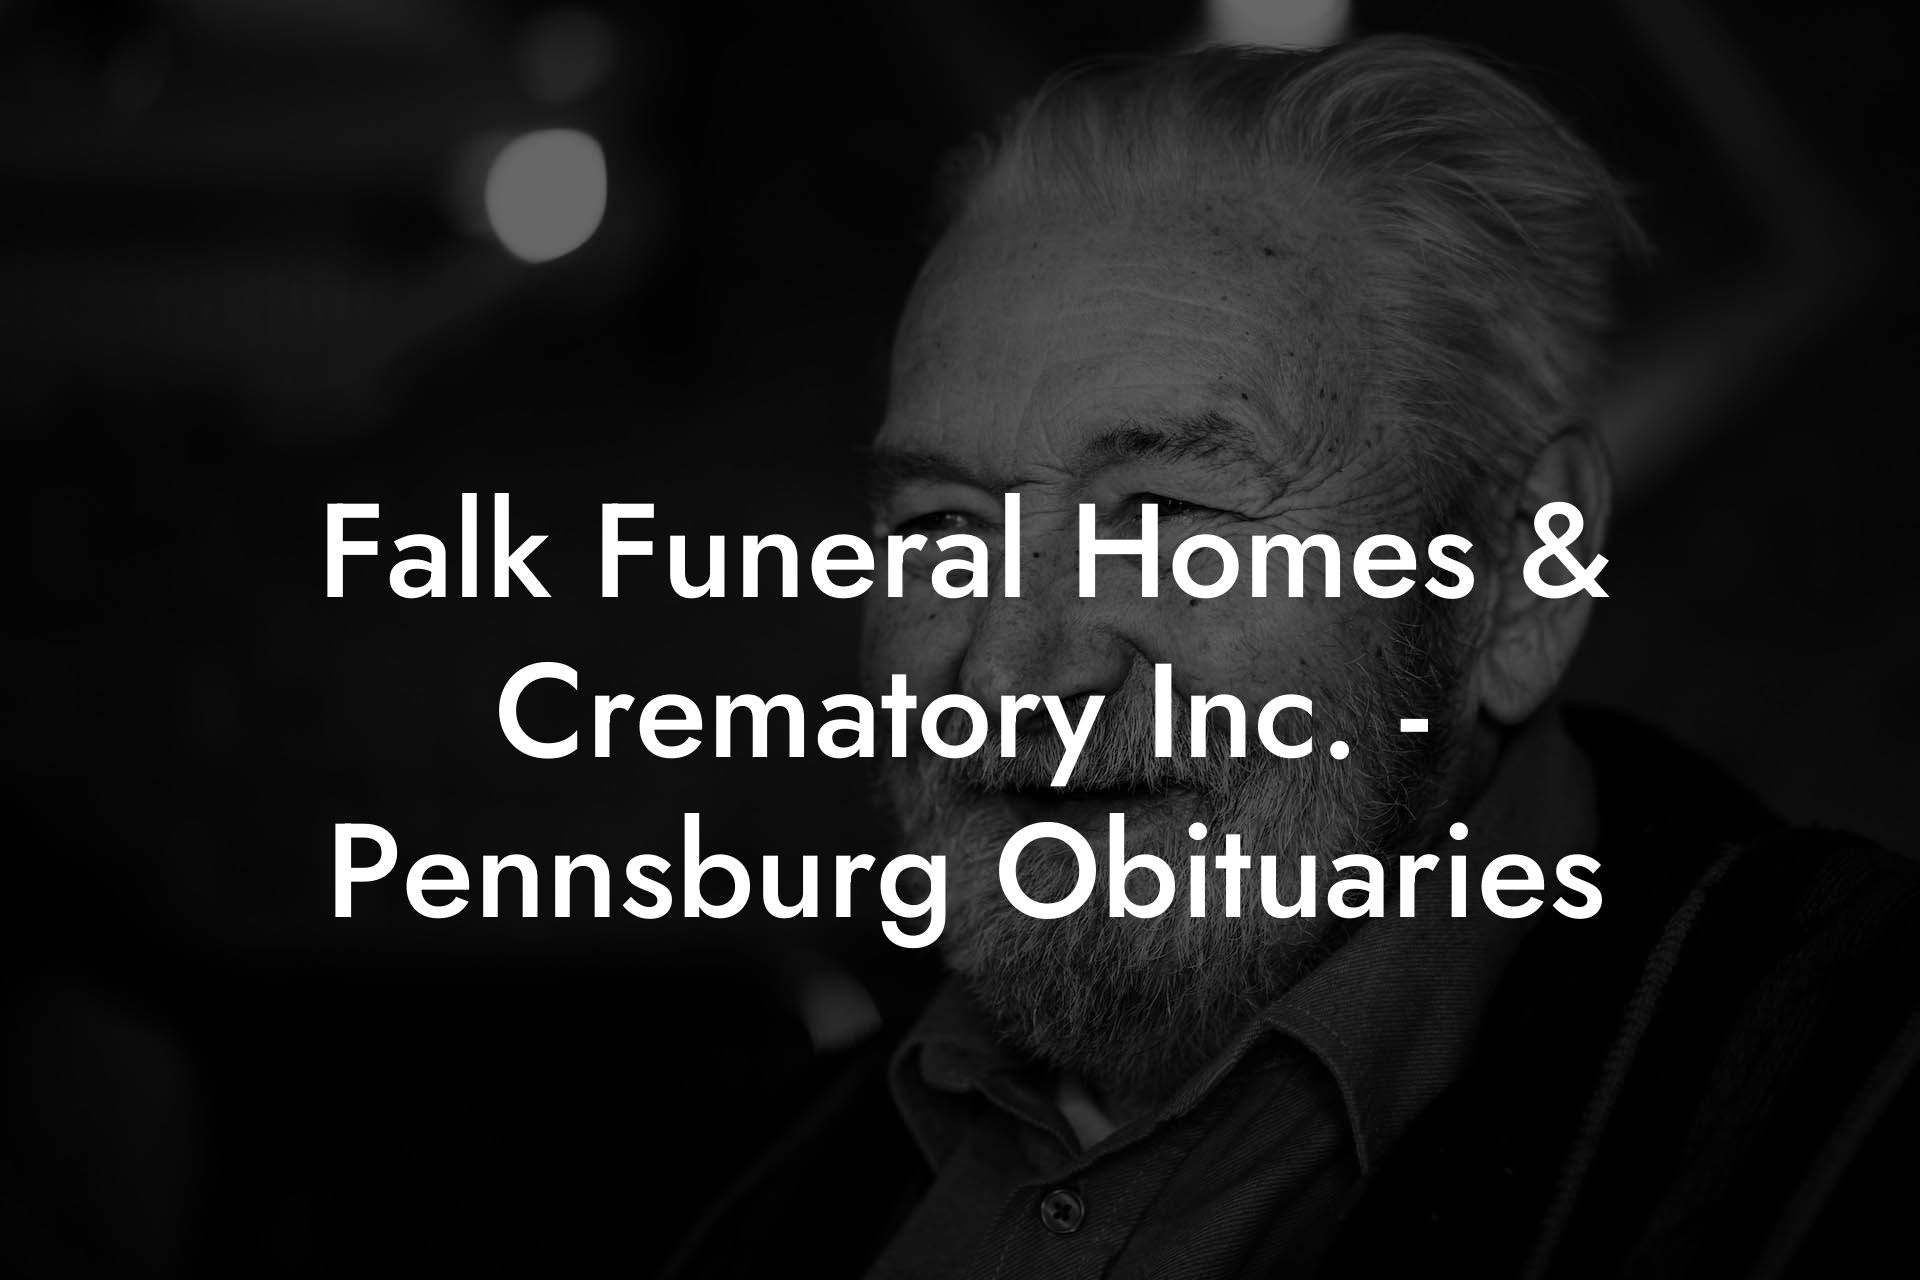 Falk Funeral Homes & Crematory Inc. - Pennsburg Obituaries